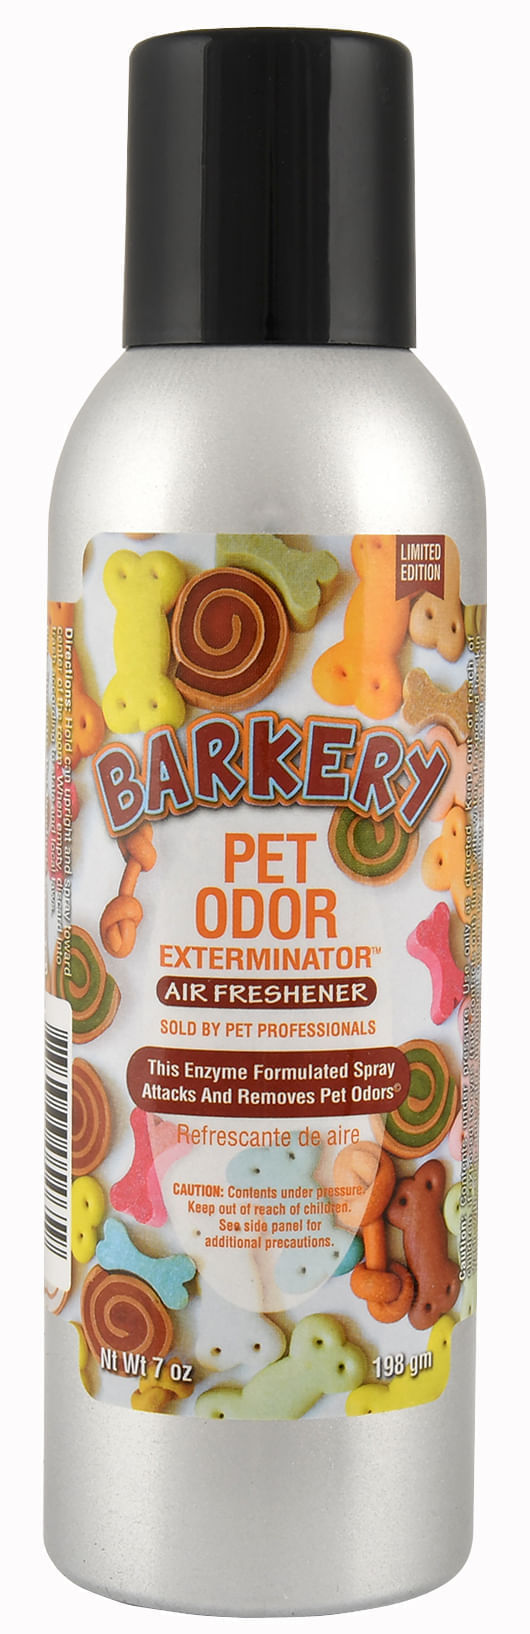 Pet-Odor-Exterminator-Spray-Barkery